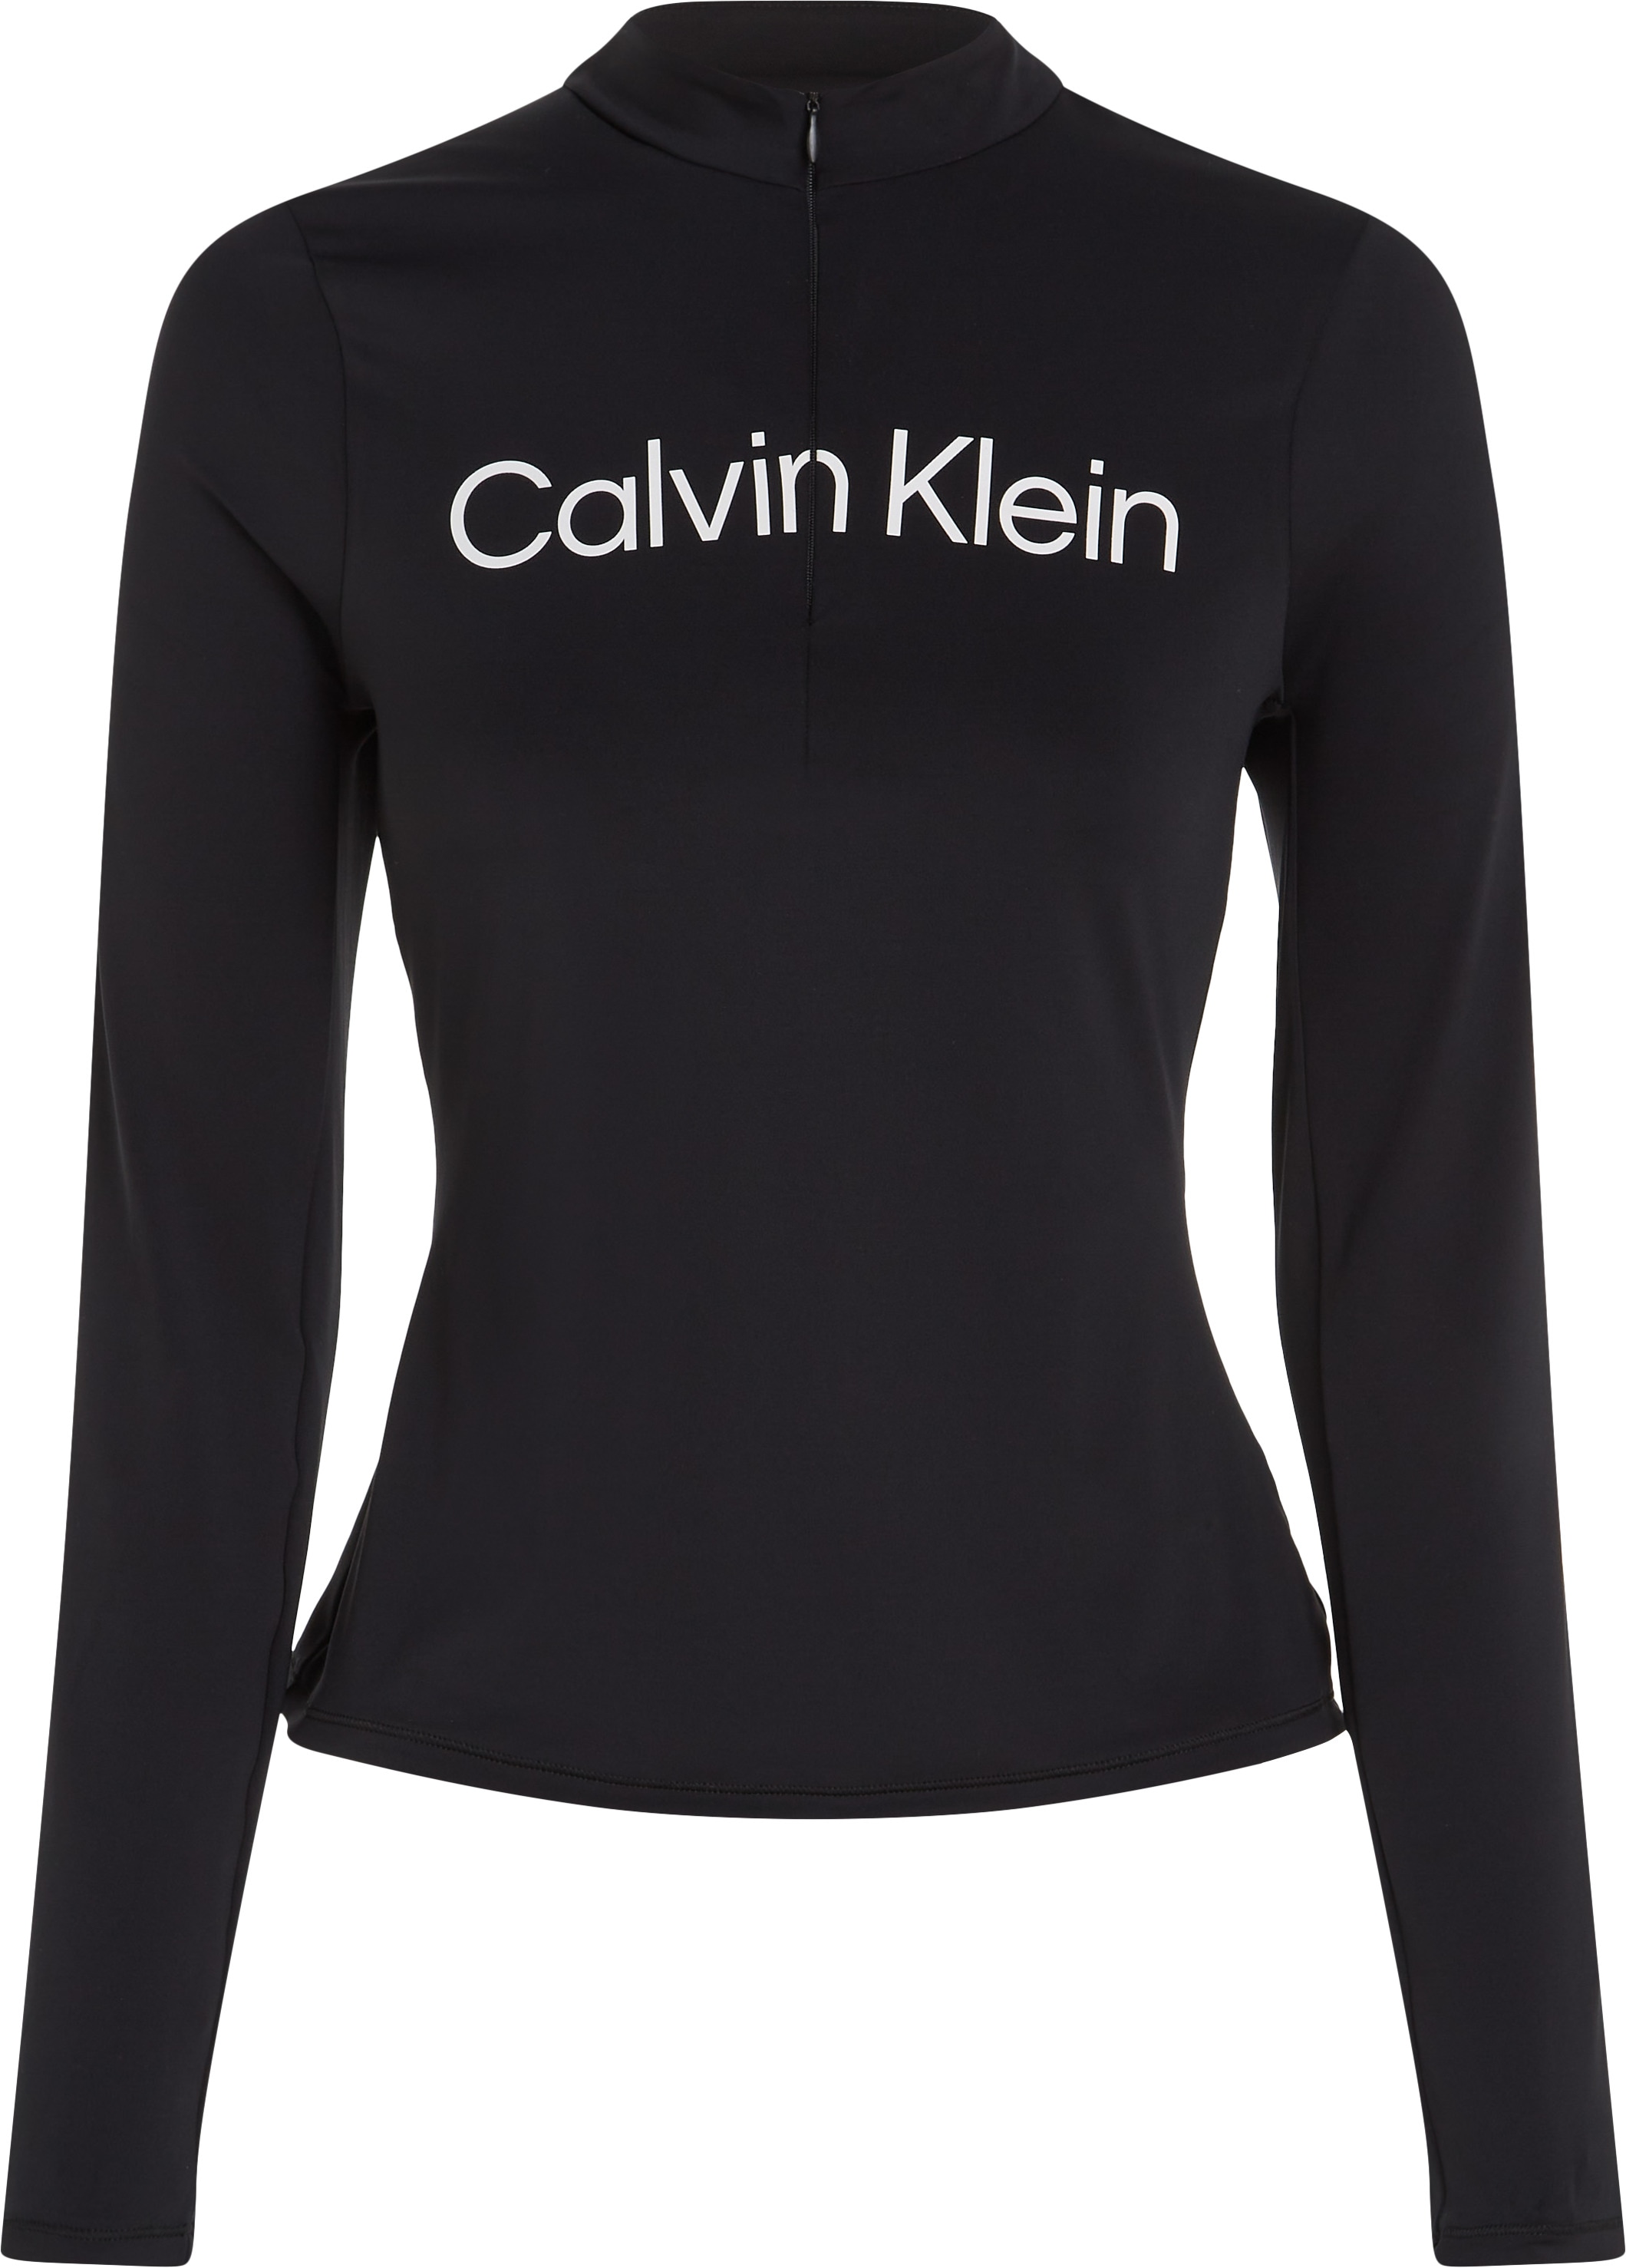 | Top« BAUR Langarmshirt Klein LS »WO online Calvin bestellen - Sport